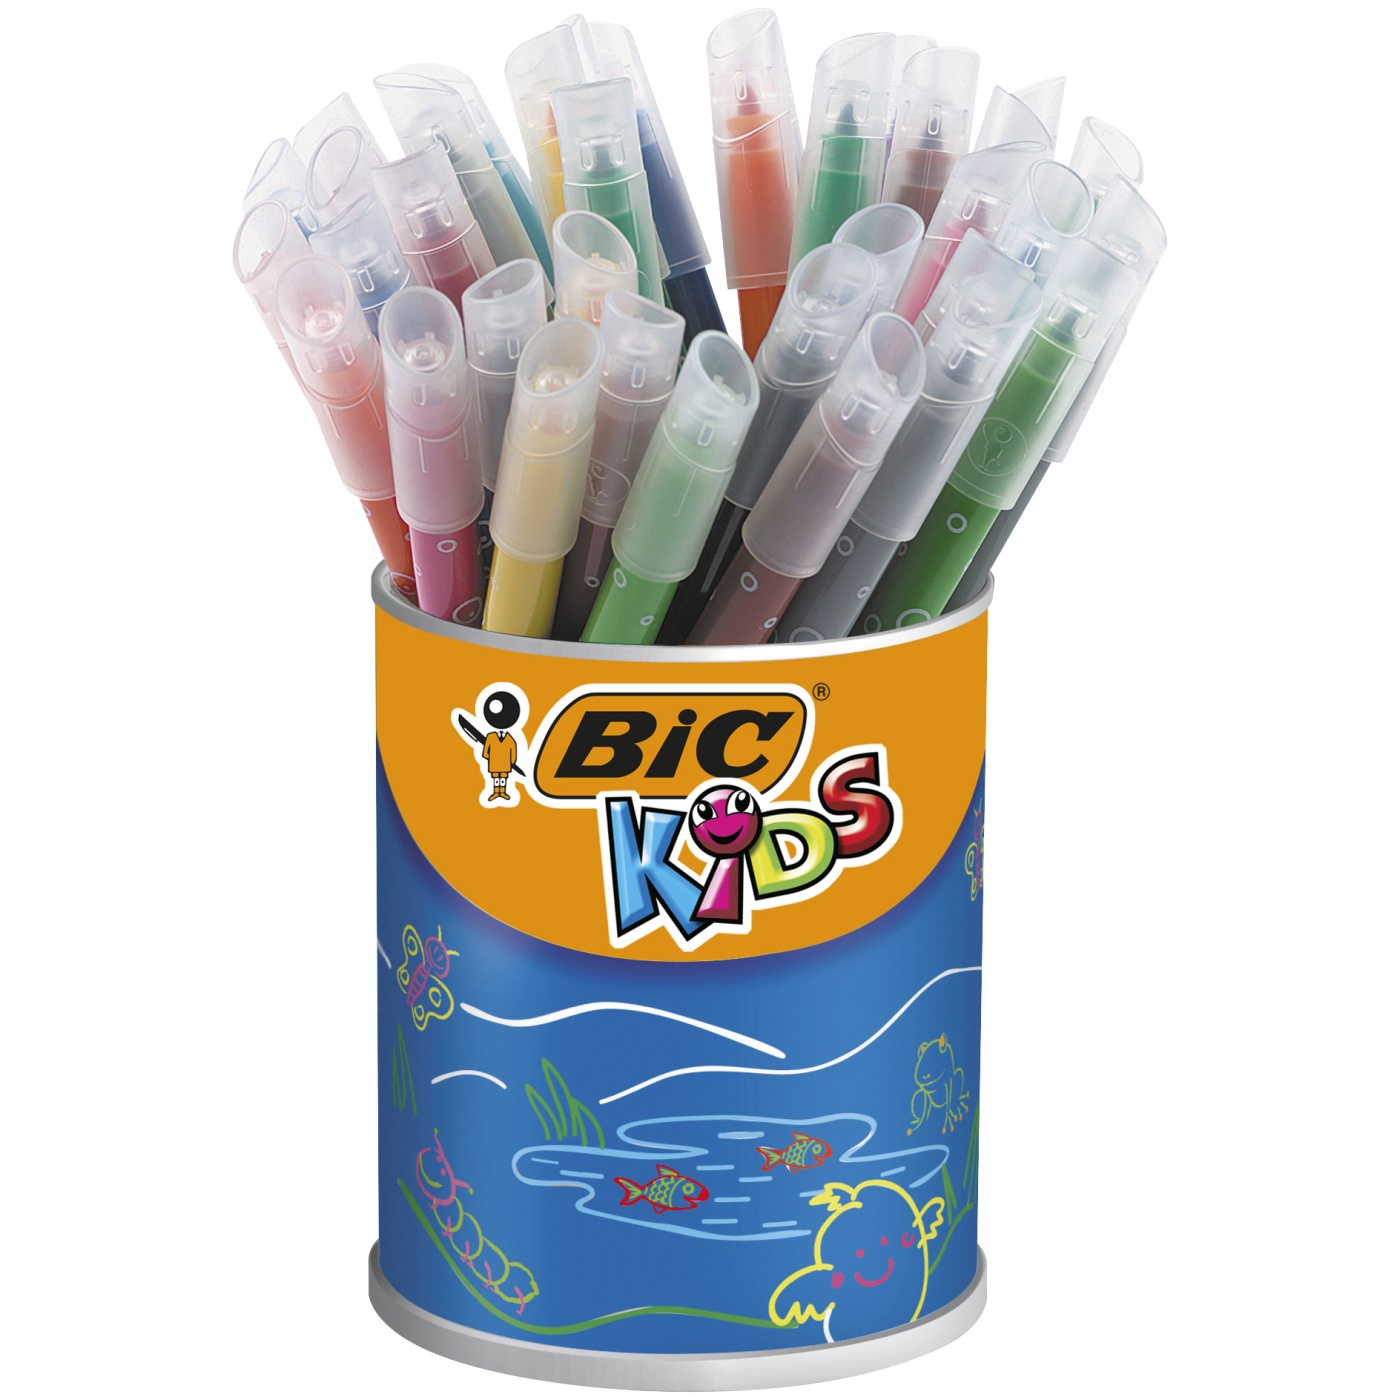 Kids Couleur Felt-tip Pens 36-set in the group Kids / Kids' Pens / Felt Tip Pens for Kids at Pen Store (100254)